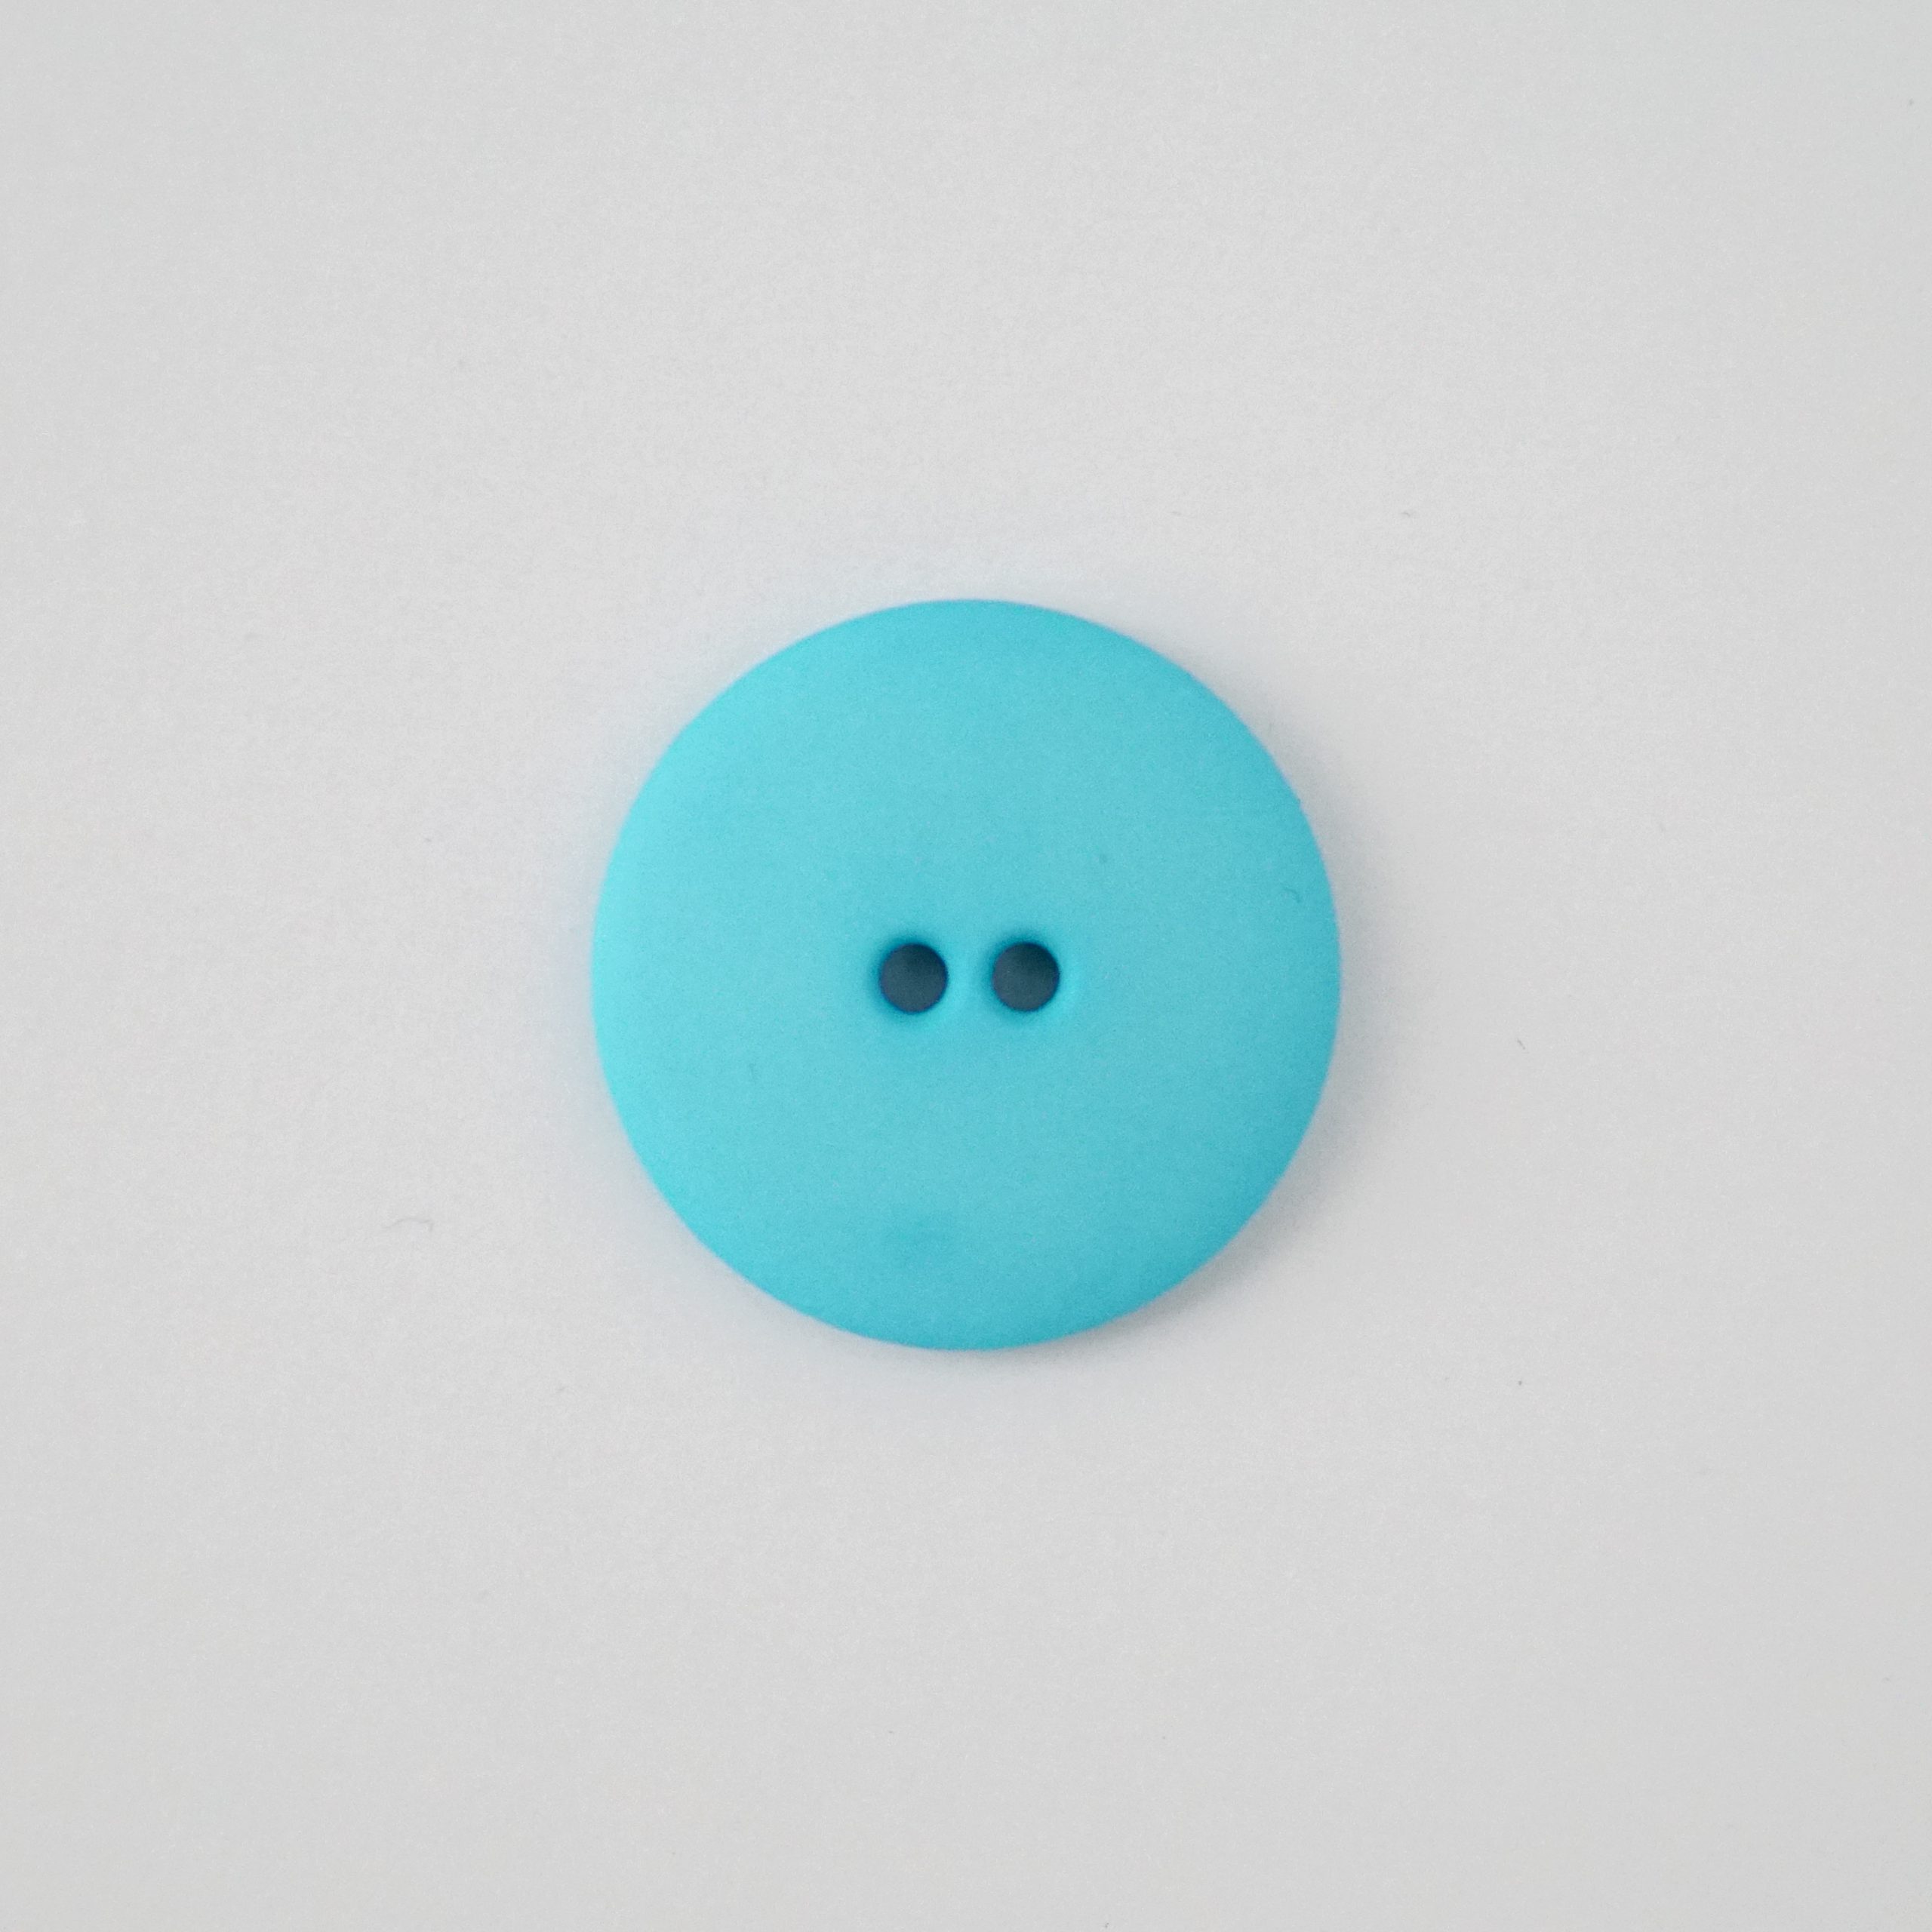 plastic button webshop - Turquoise plastic button | Matt round plastic button - by HipKnitShop - 29/10/2018